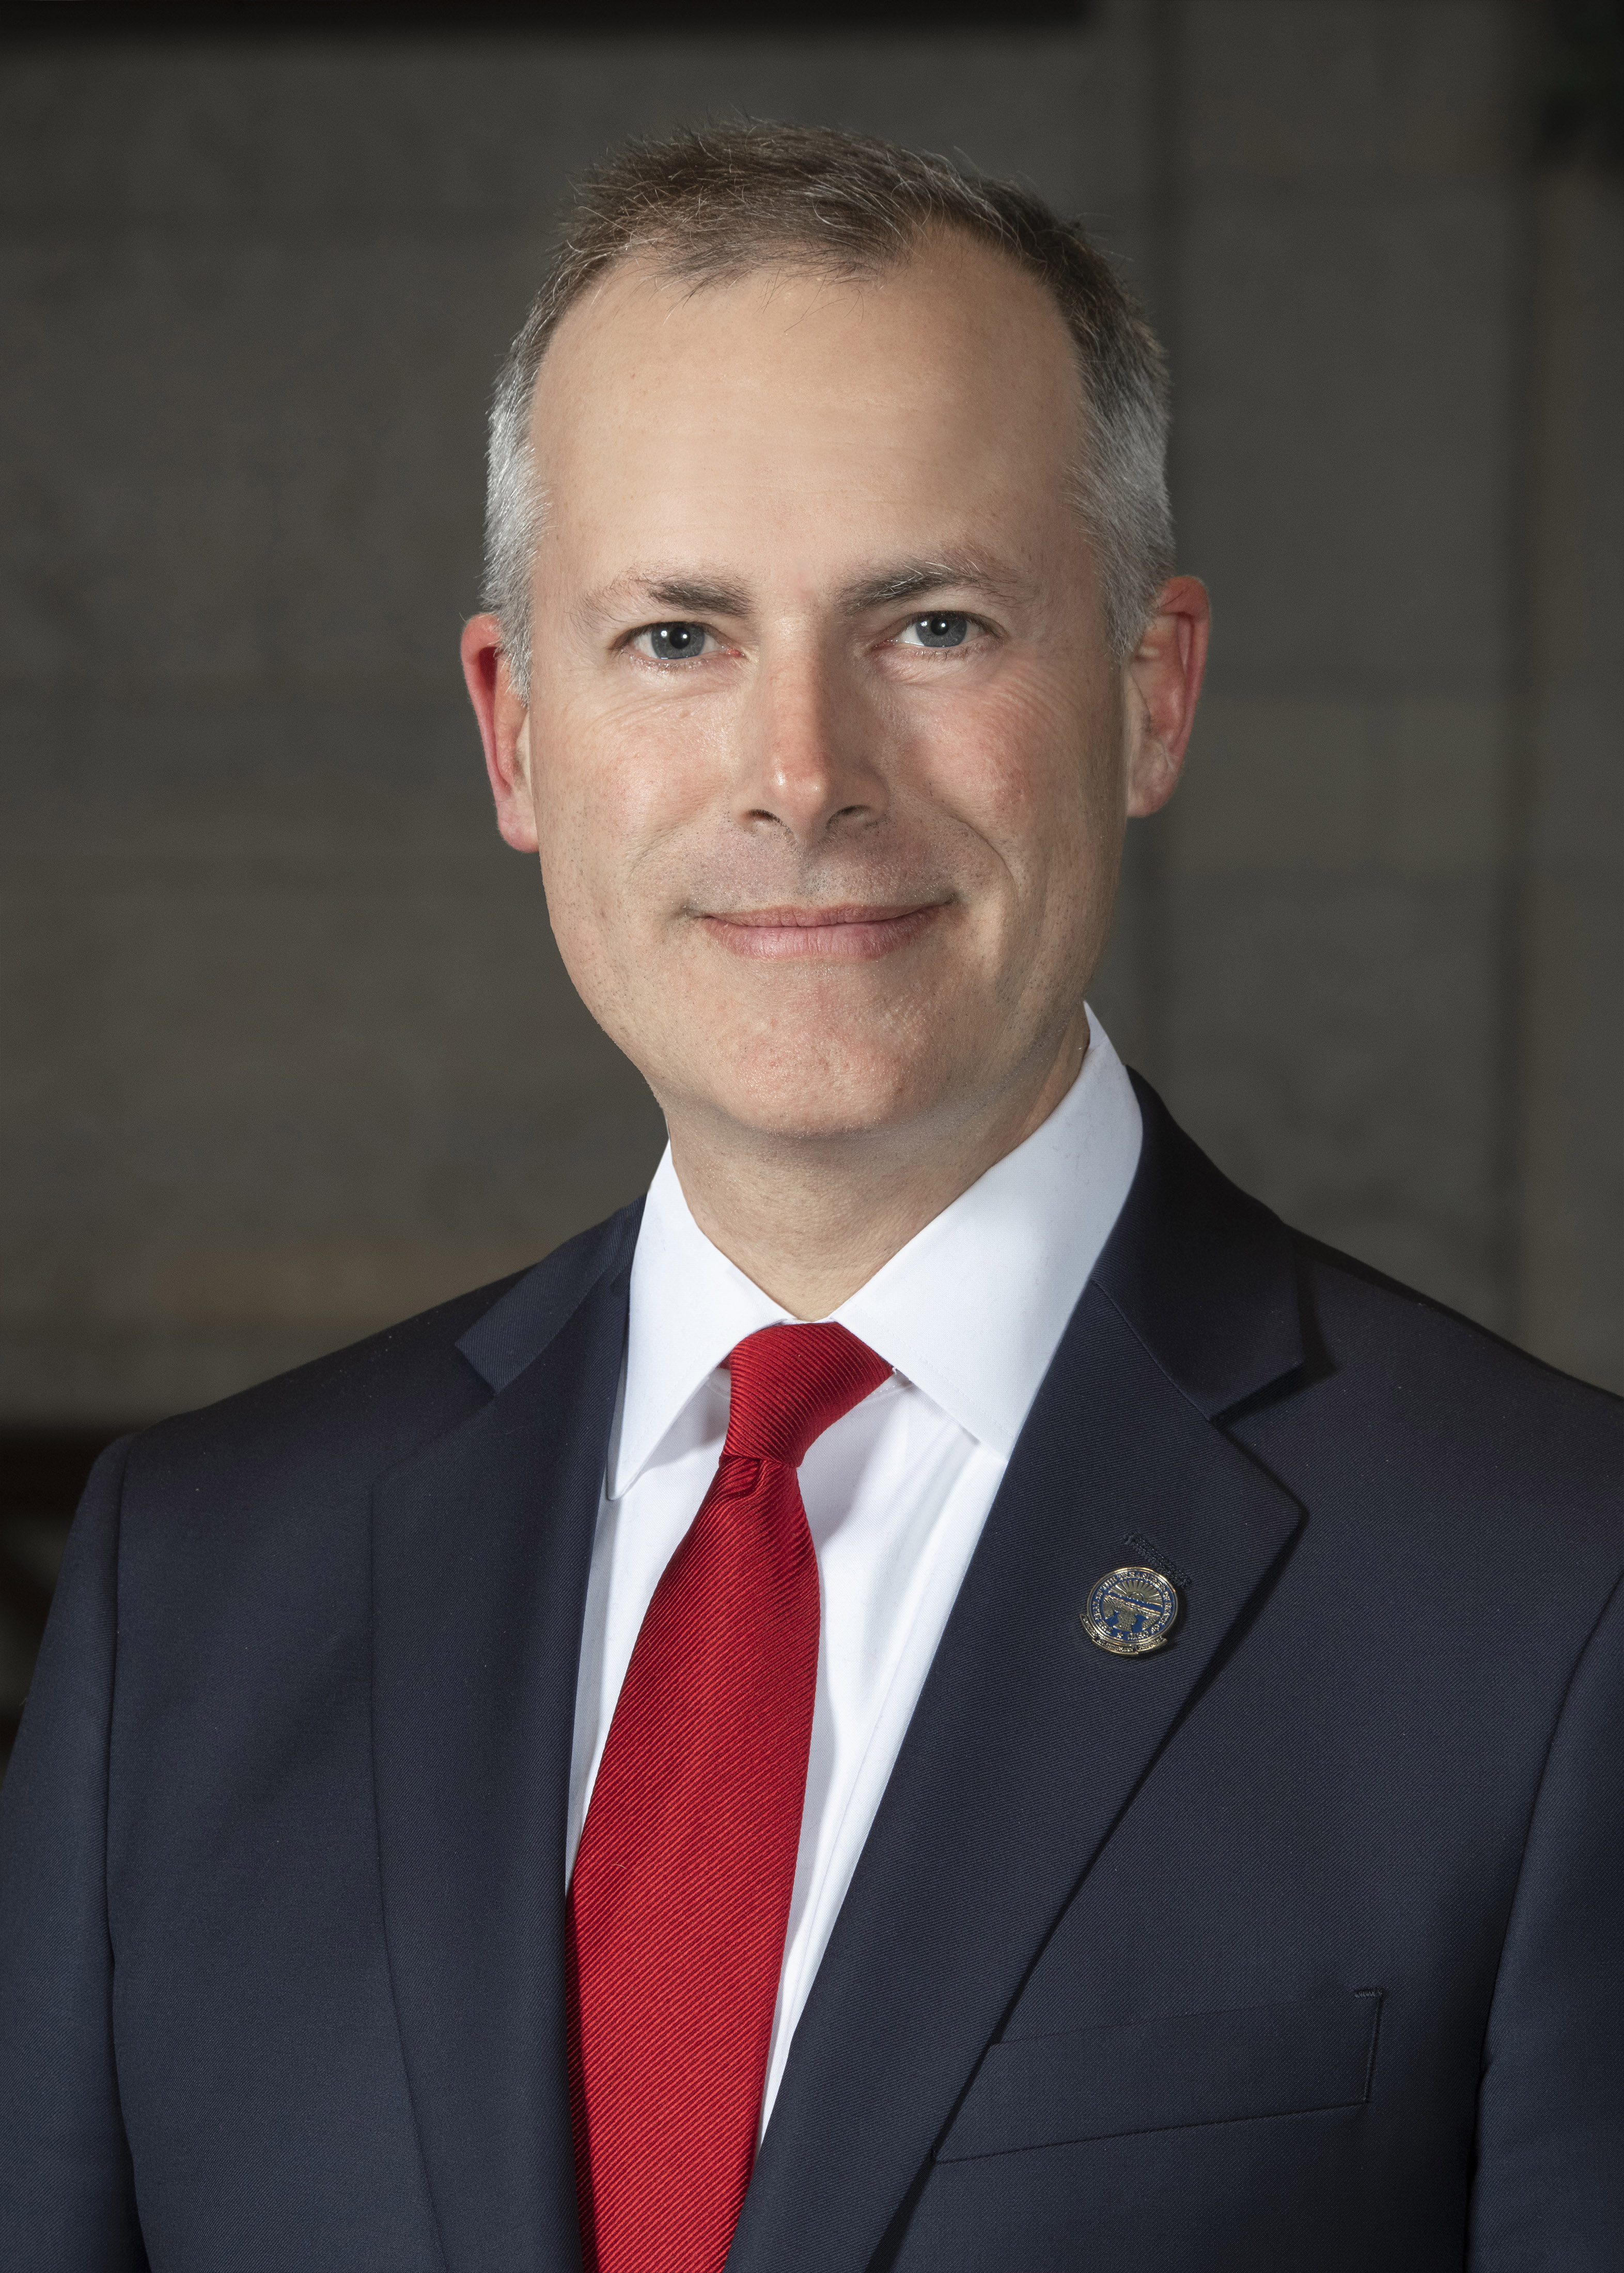 Treasurer of State Robert Sprague 2019-present